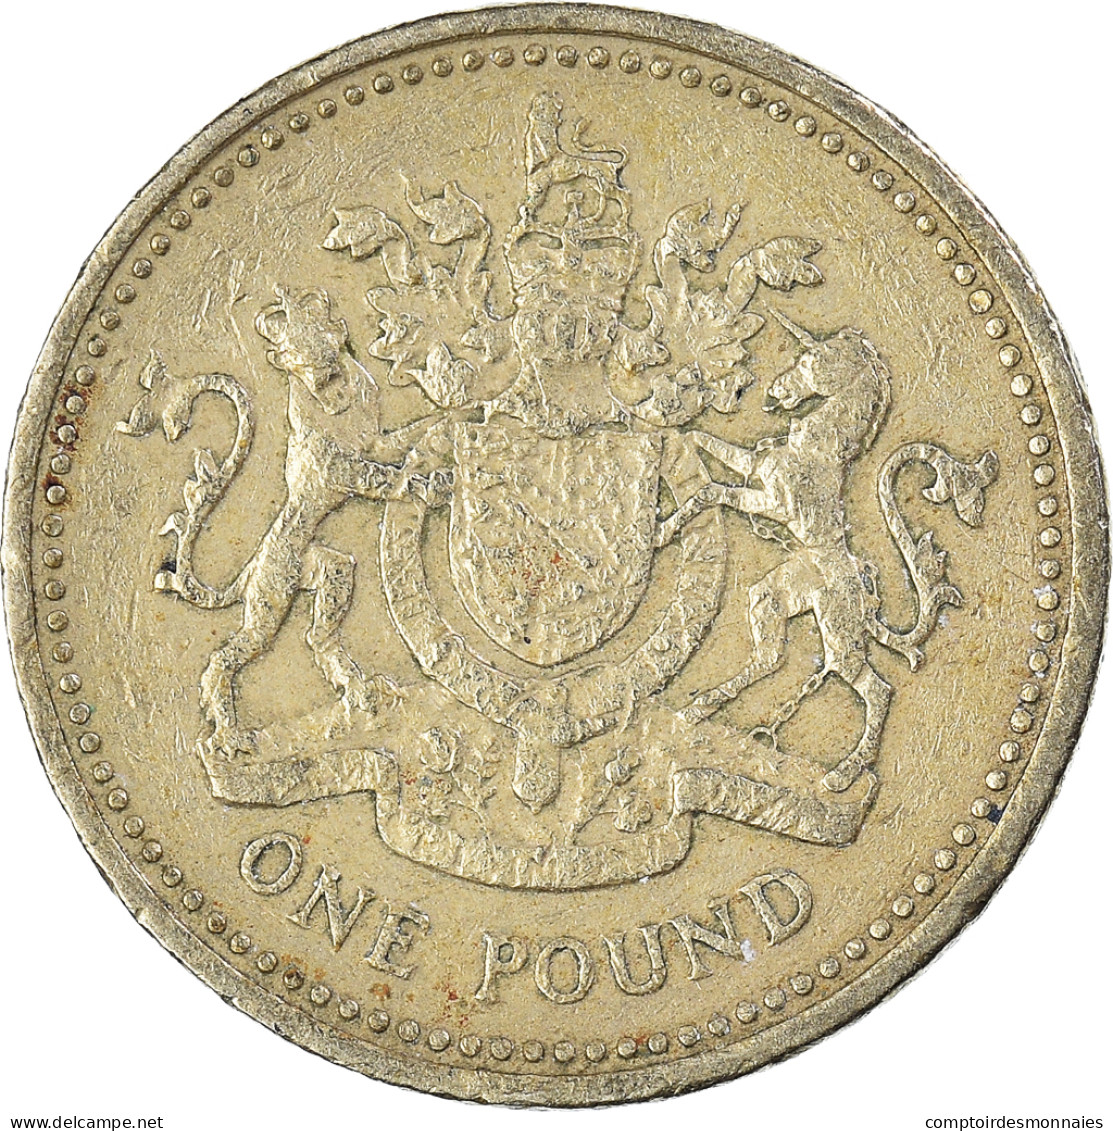 Monnaie, Grande-Bretagne, Pound, 1993 - 1 Pound